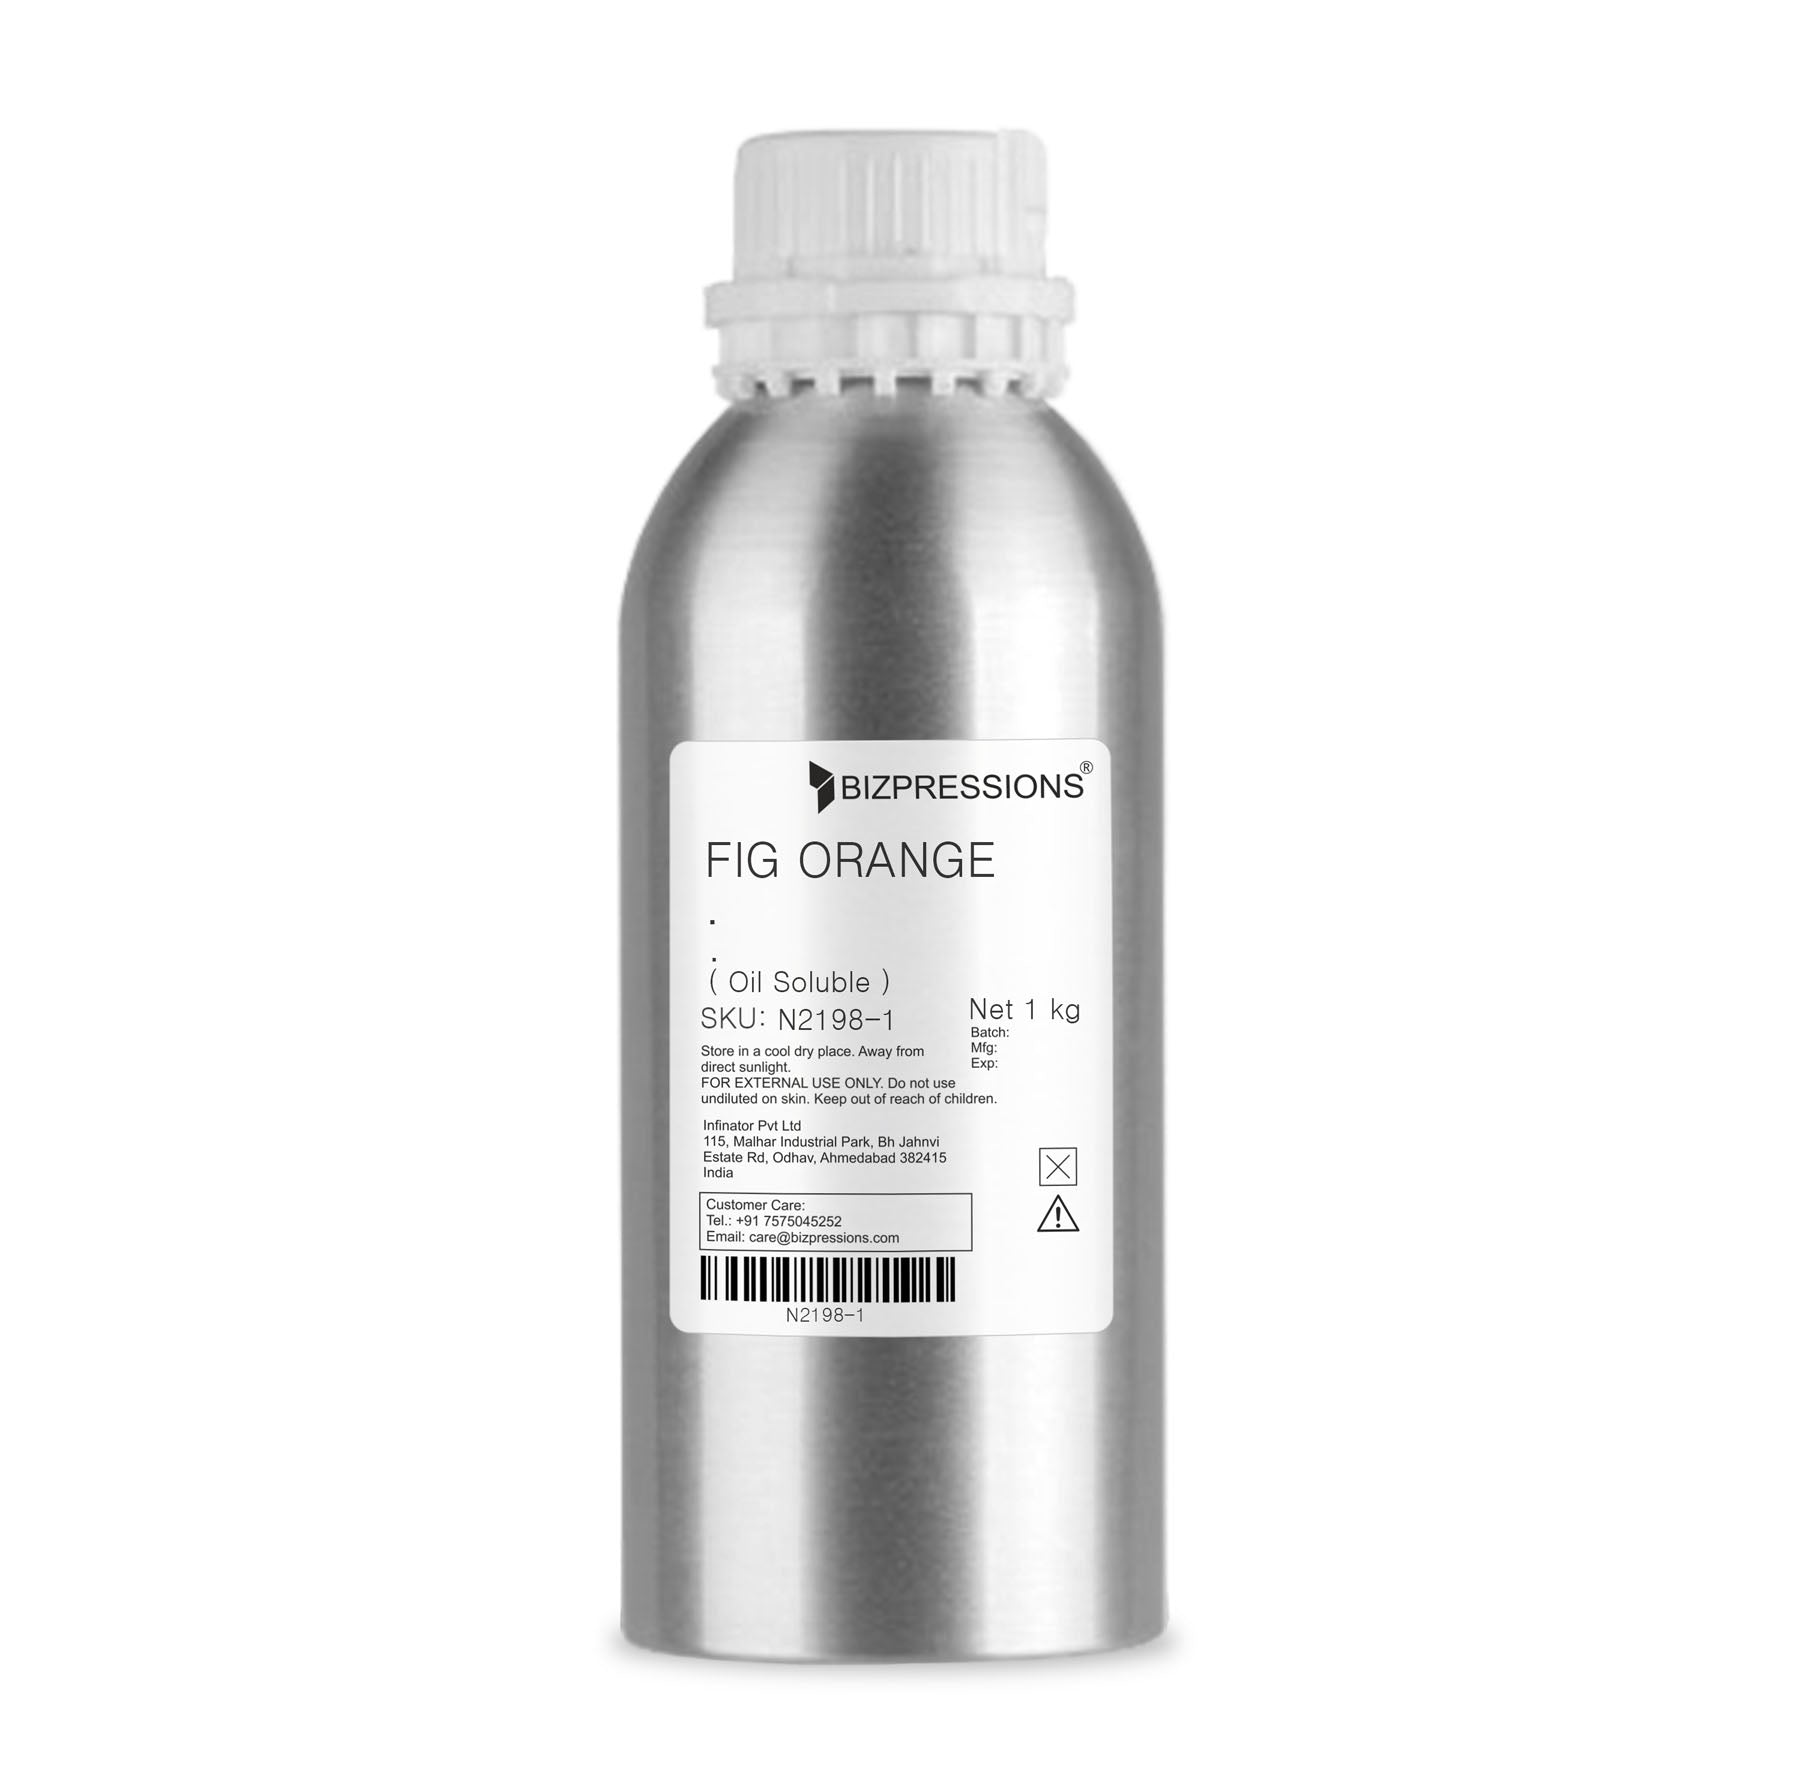 FIG ORANGE - Fragrance ( Oil Soluble ) - 1 kg